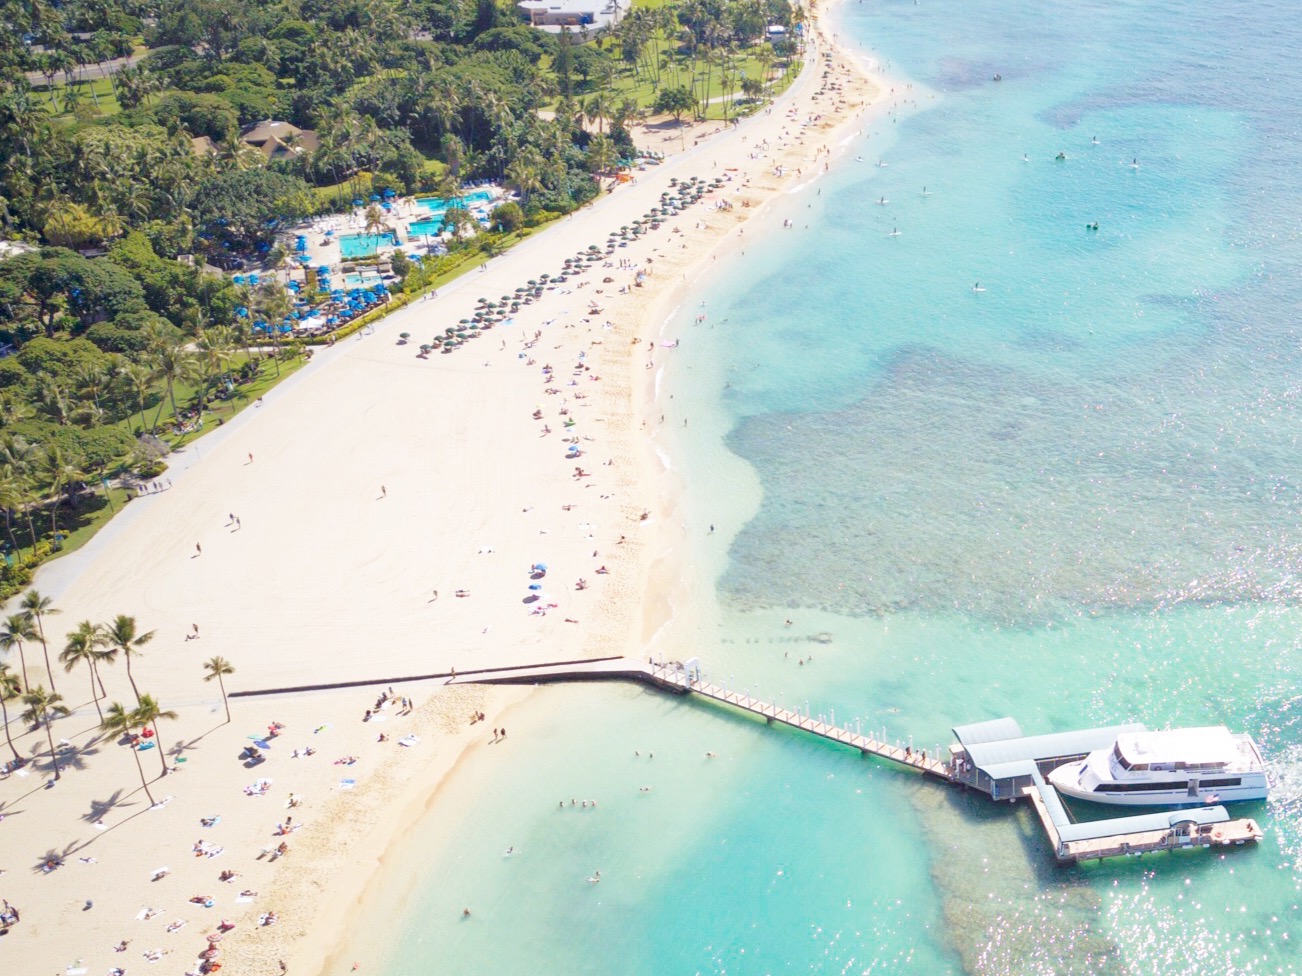 30 Drone Photos To Inspire An Oahu Hawaii Vacation #oahu #hawaii #vacation #travel